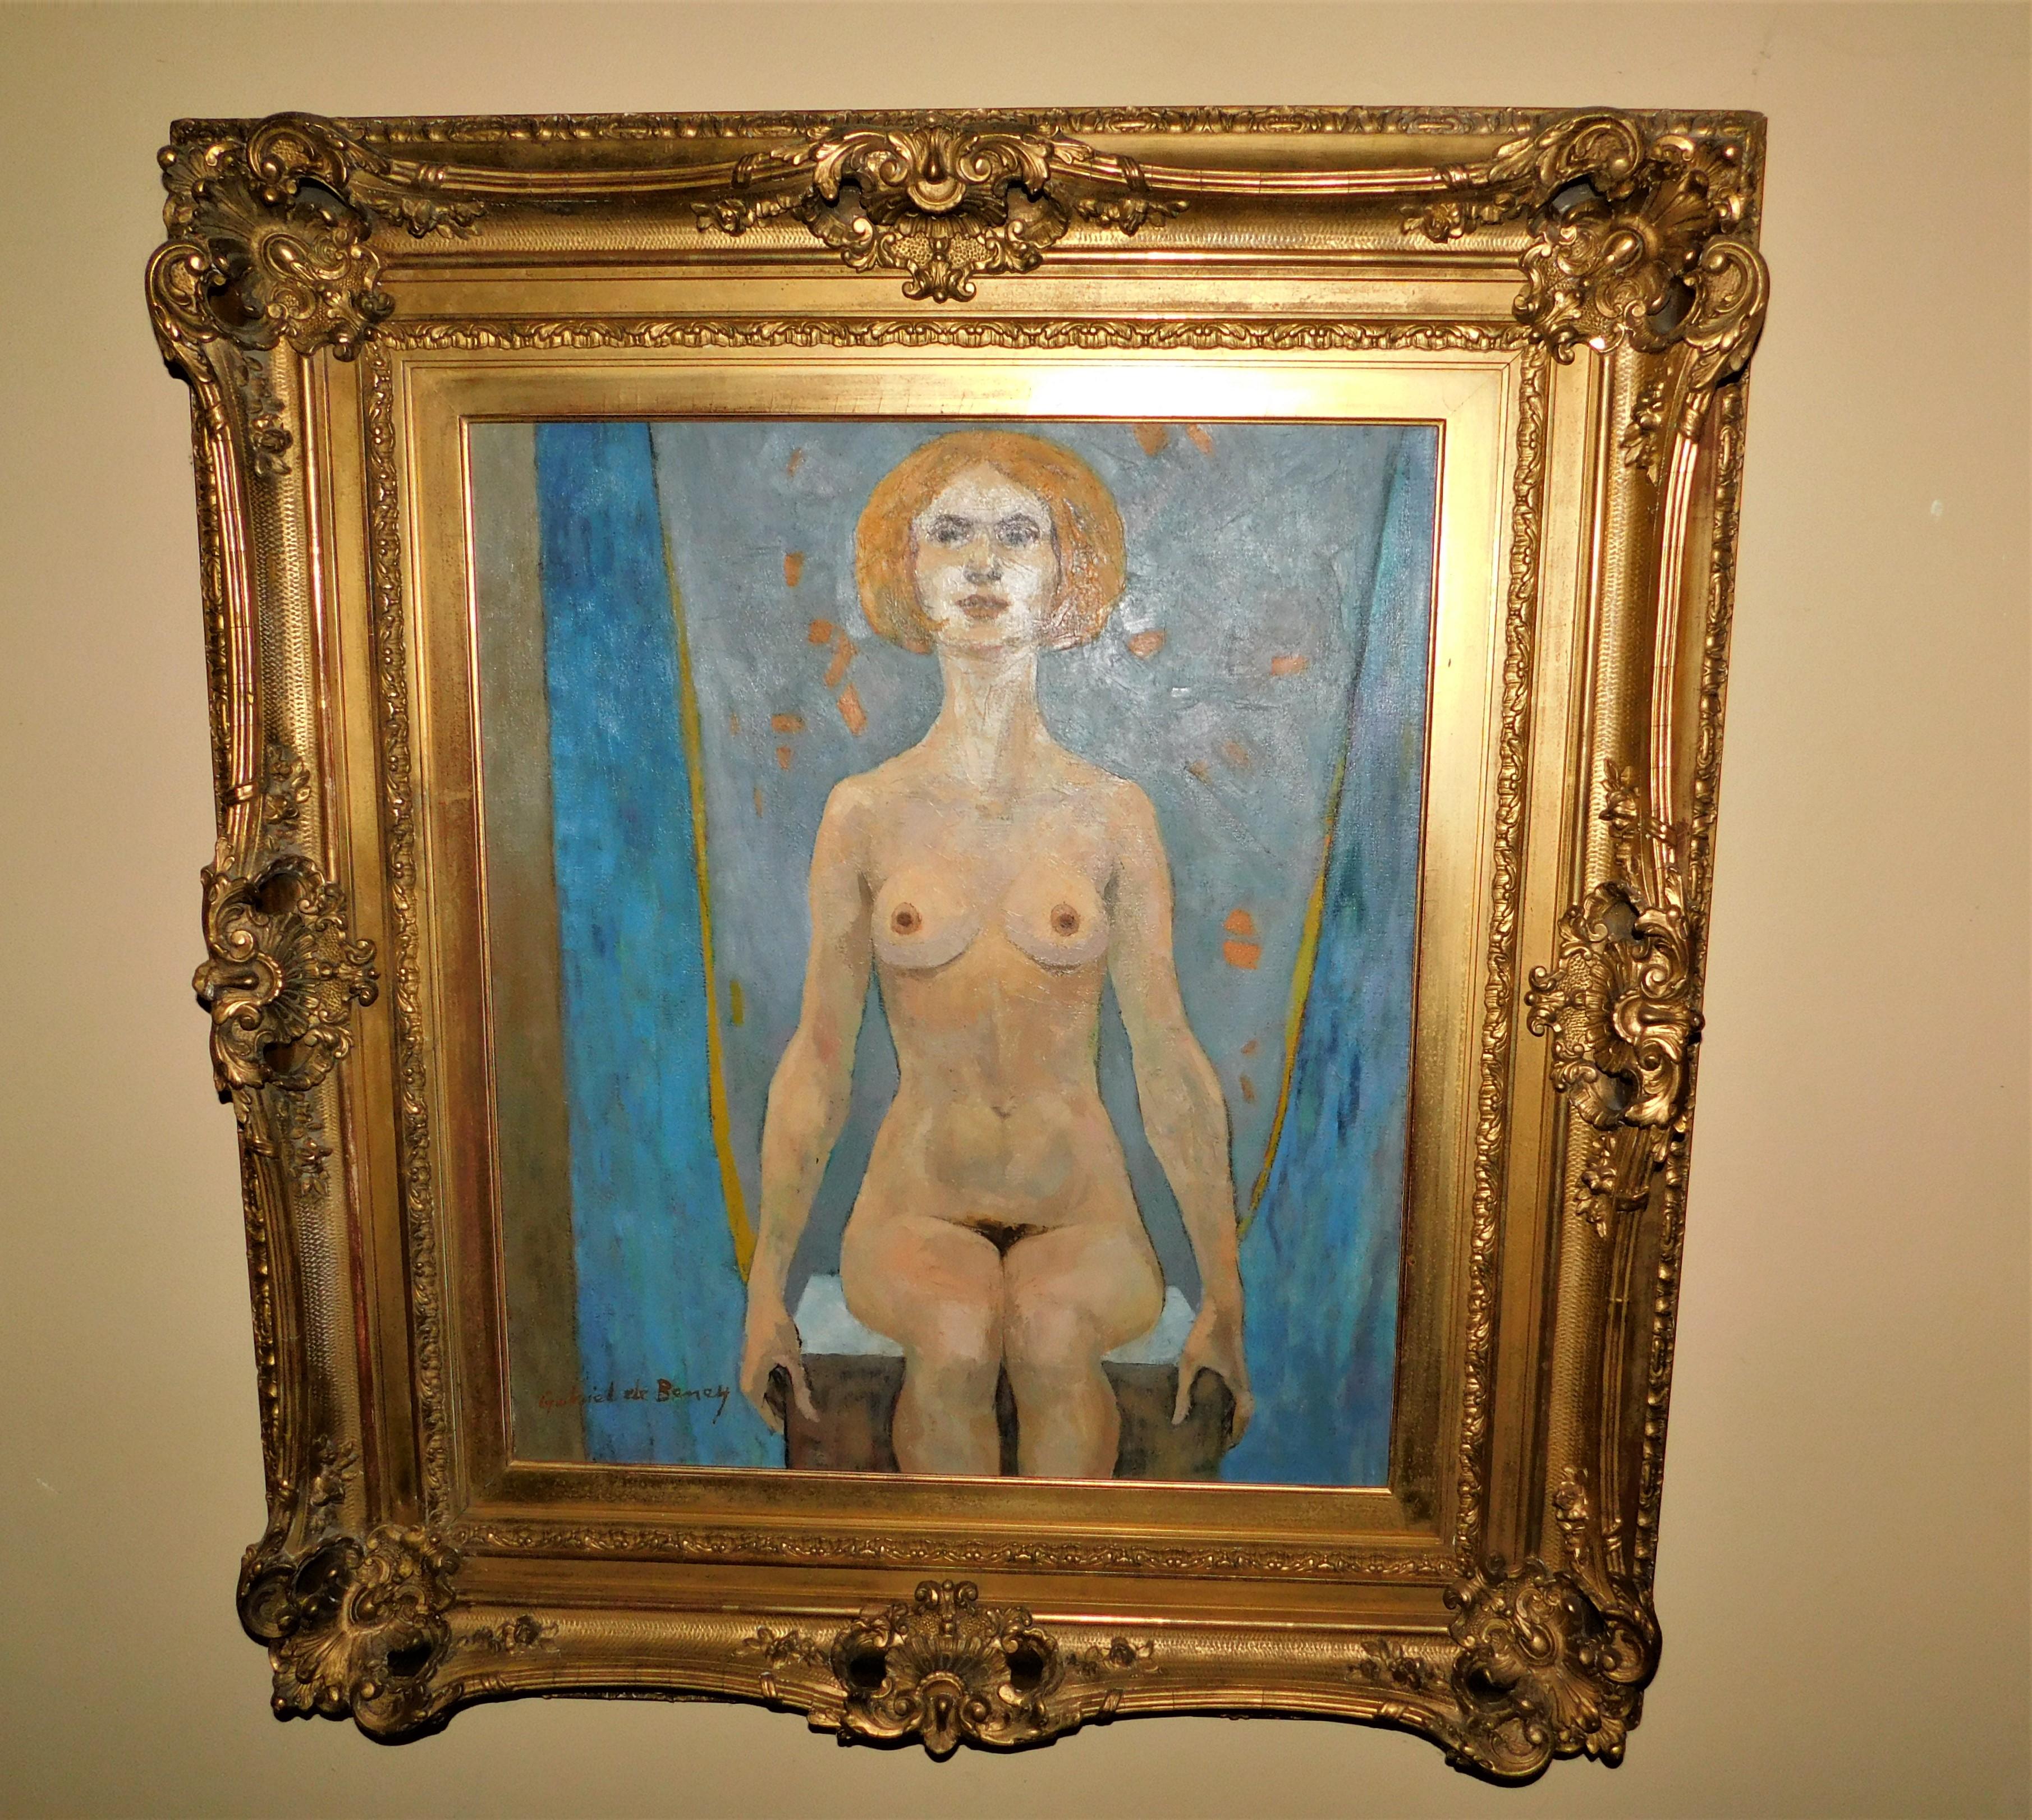 Gabriel de Beney Nude Oil on Canvas Painting For Sale 1